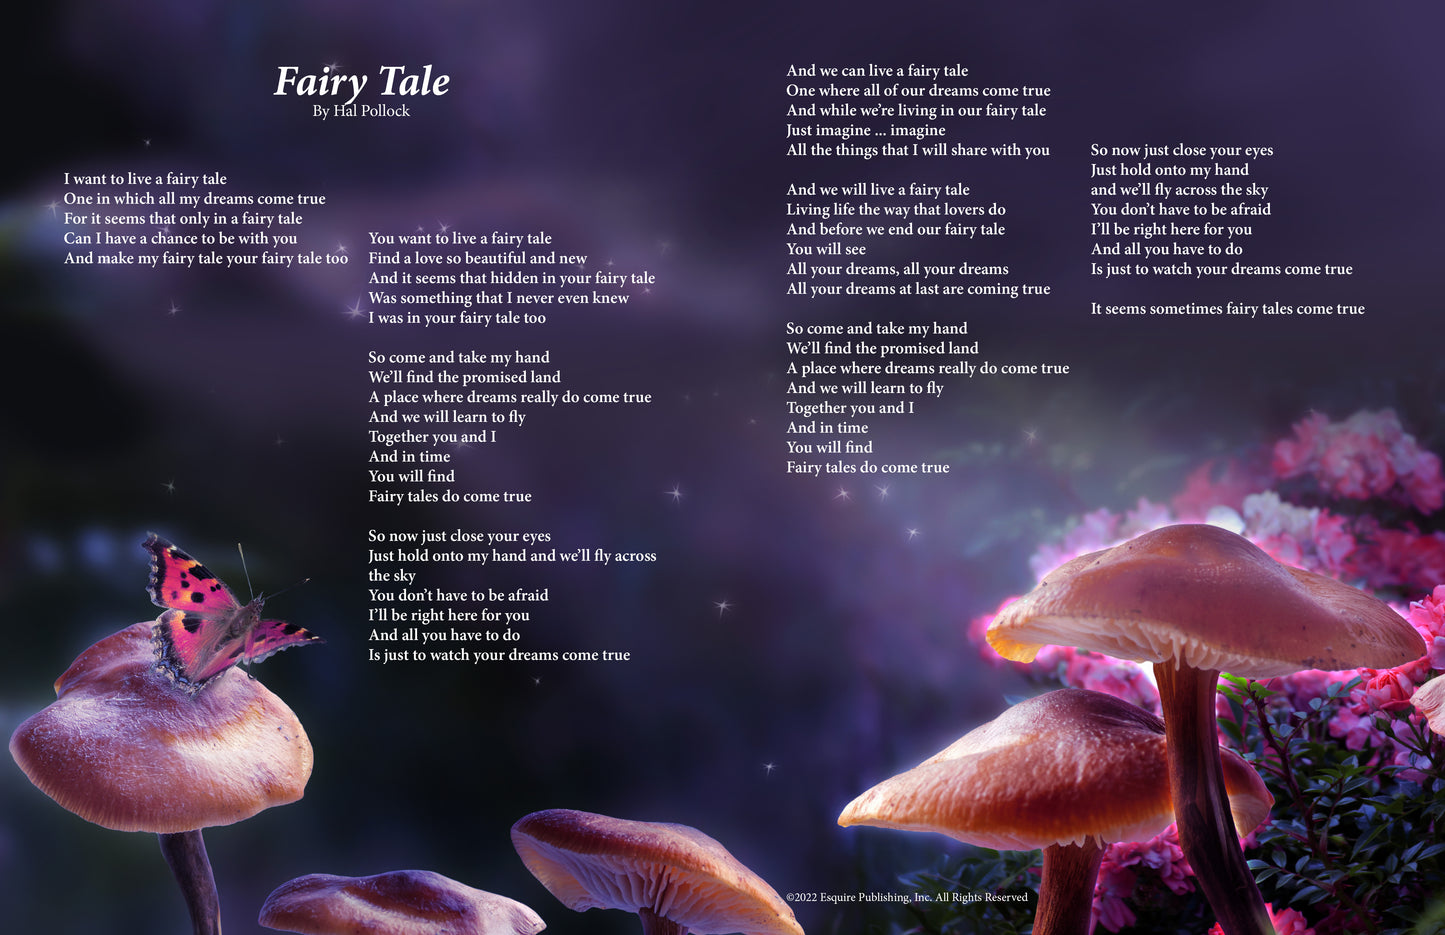 Fairy Tale 2